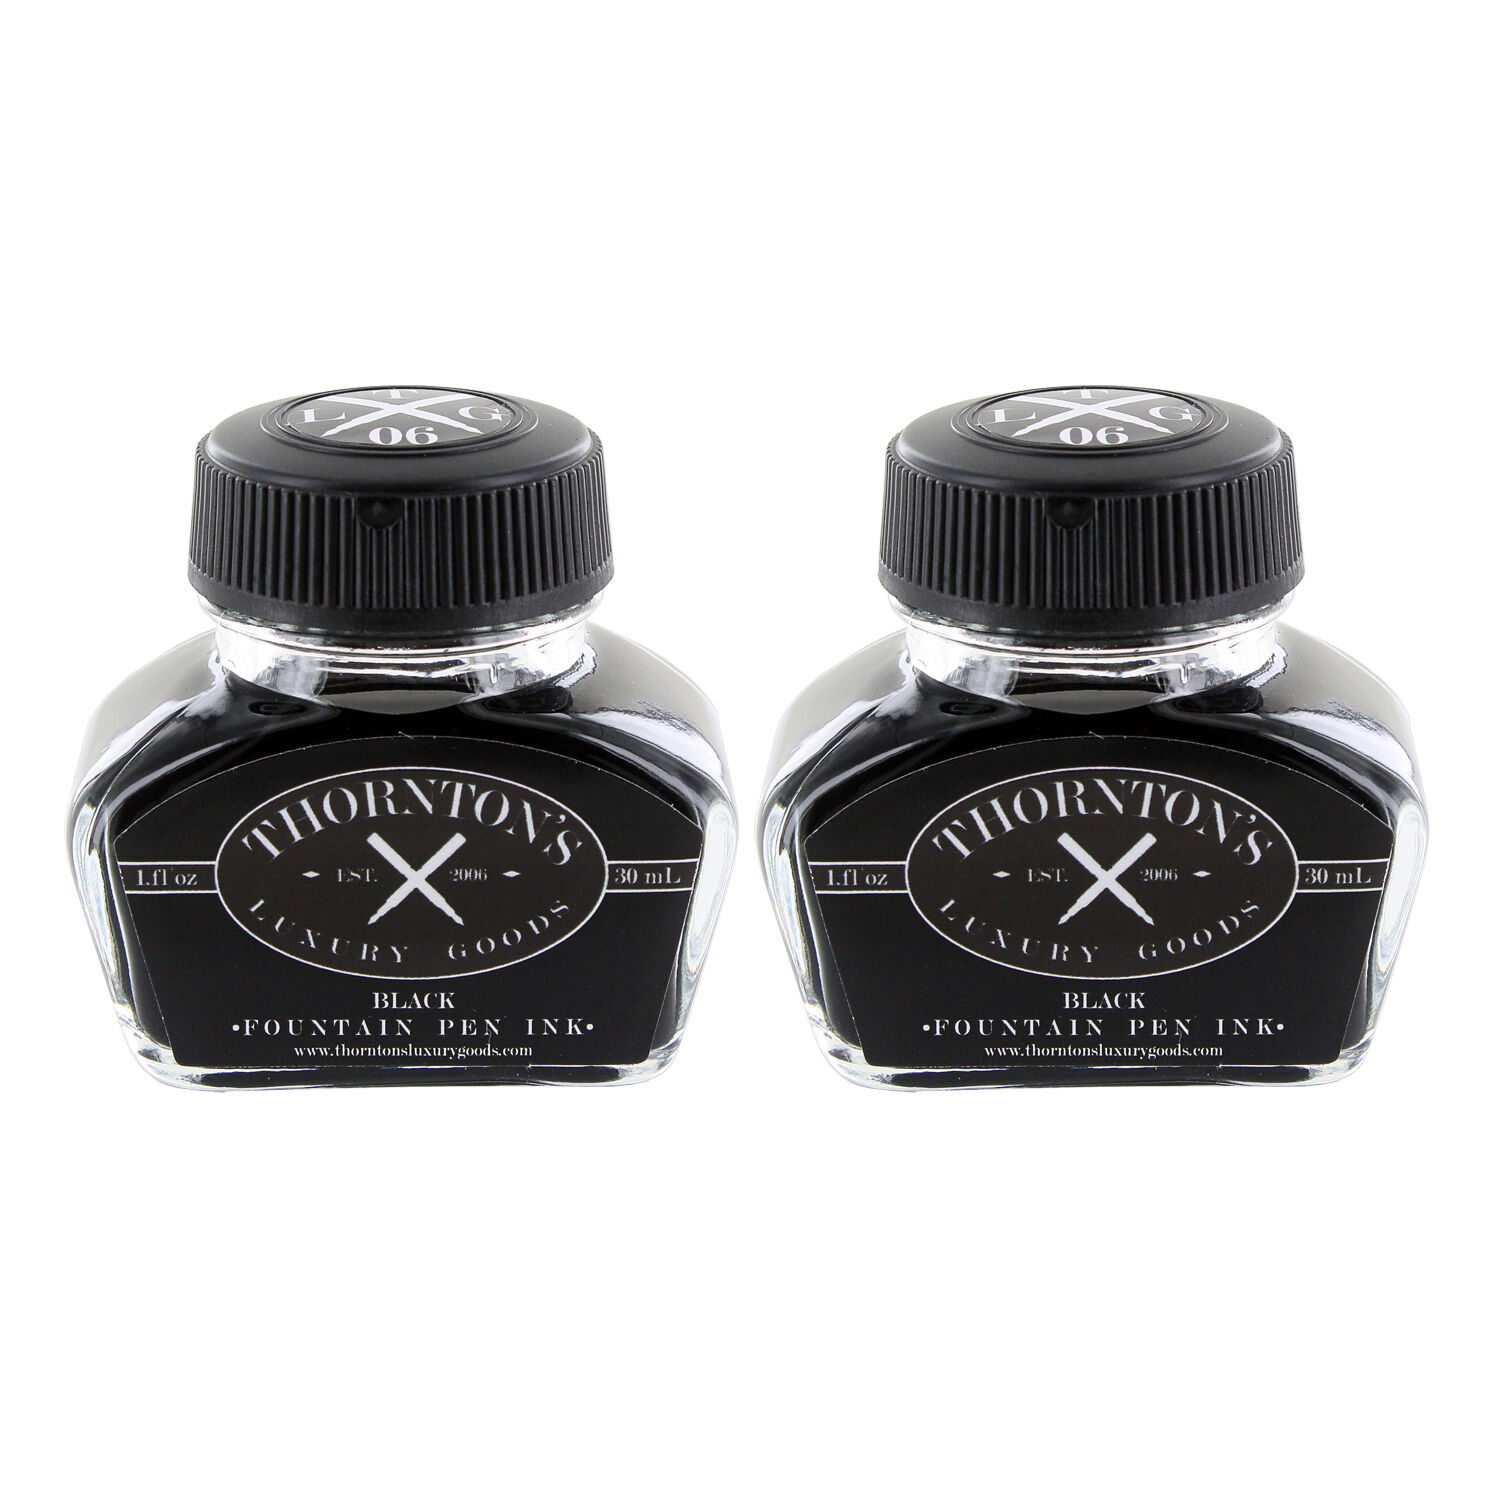 Thornton's Luxury Goods Fountain Pen Ink Bottle, 30ml - Black - Set of 2